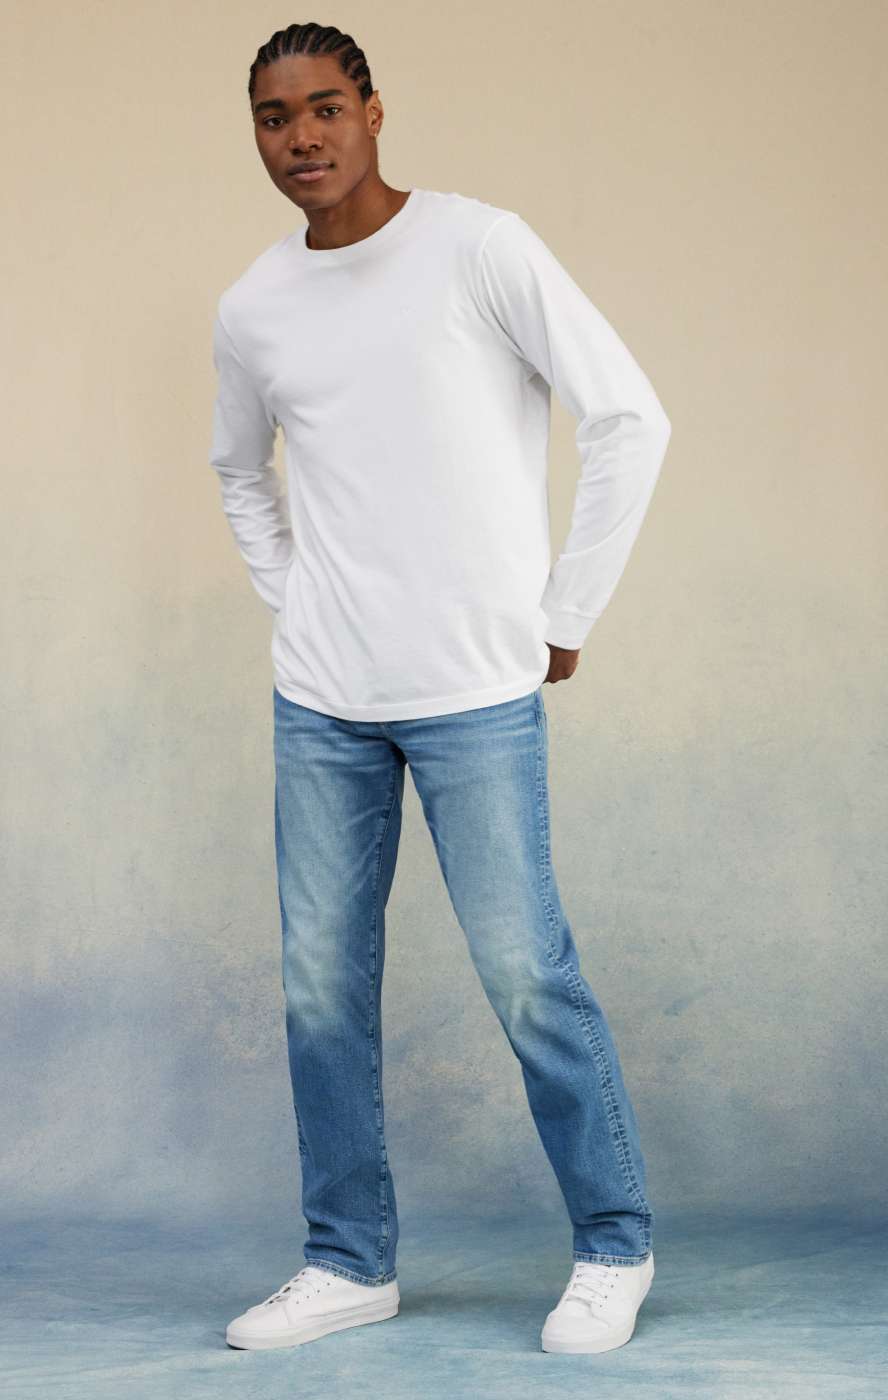 Eagle Blue Jeans - Men Basic Work White Denim Jeans Straight Leg fit 30W X  30L at  Men's Clothing store